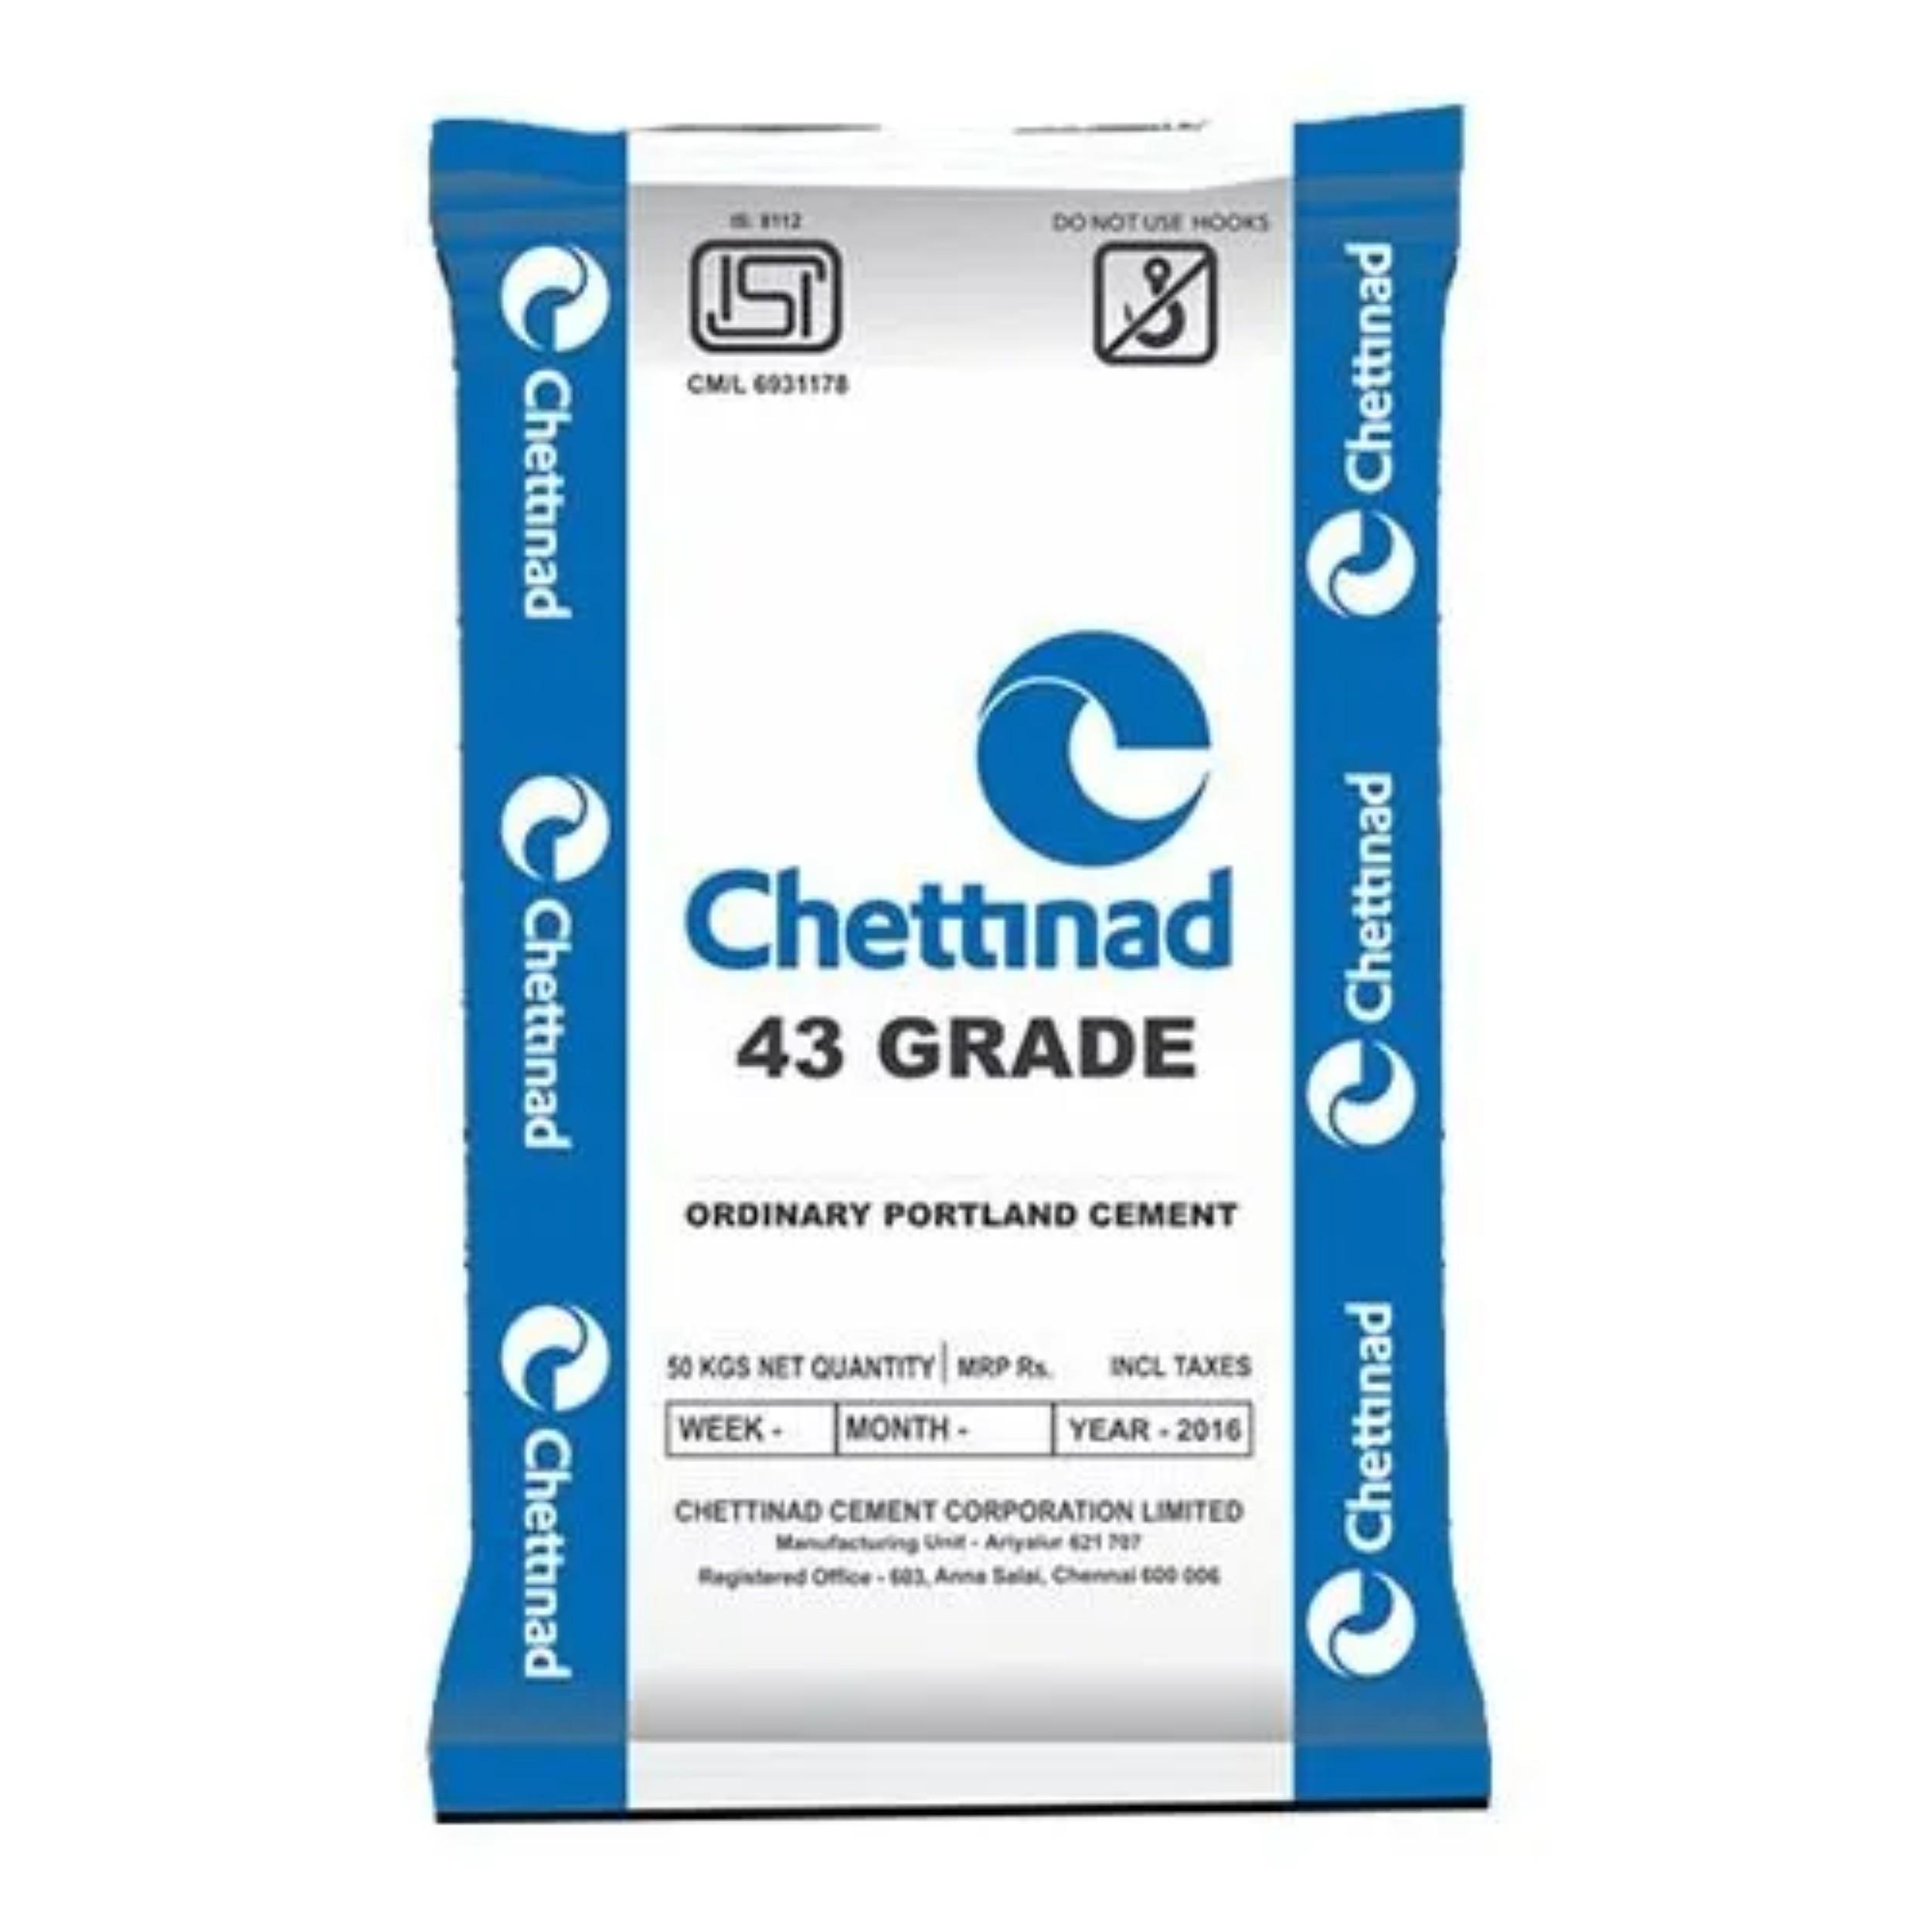 Check Chettinad Cement Price Online | Order Online